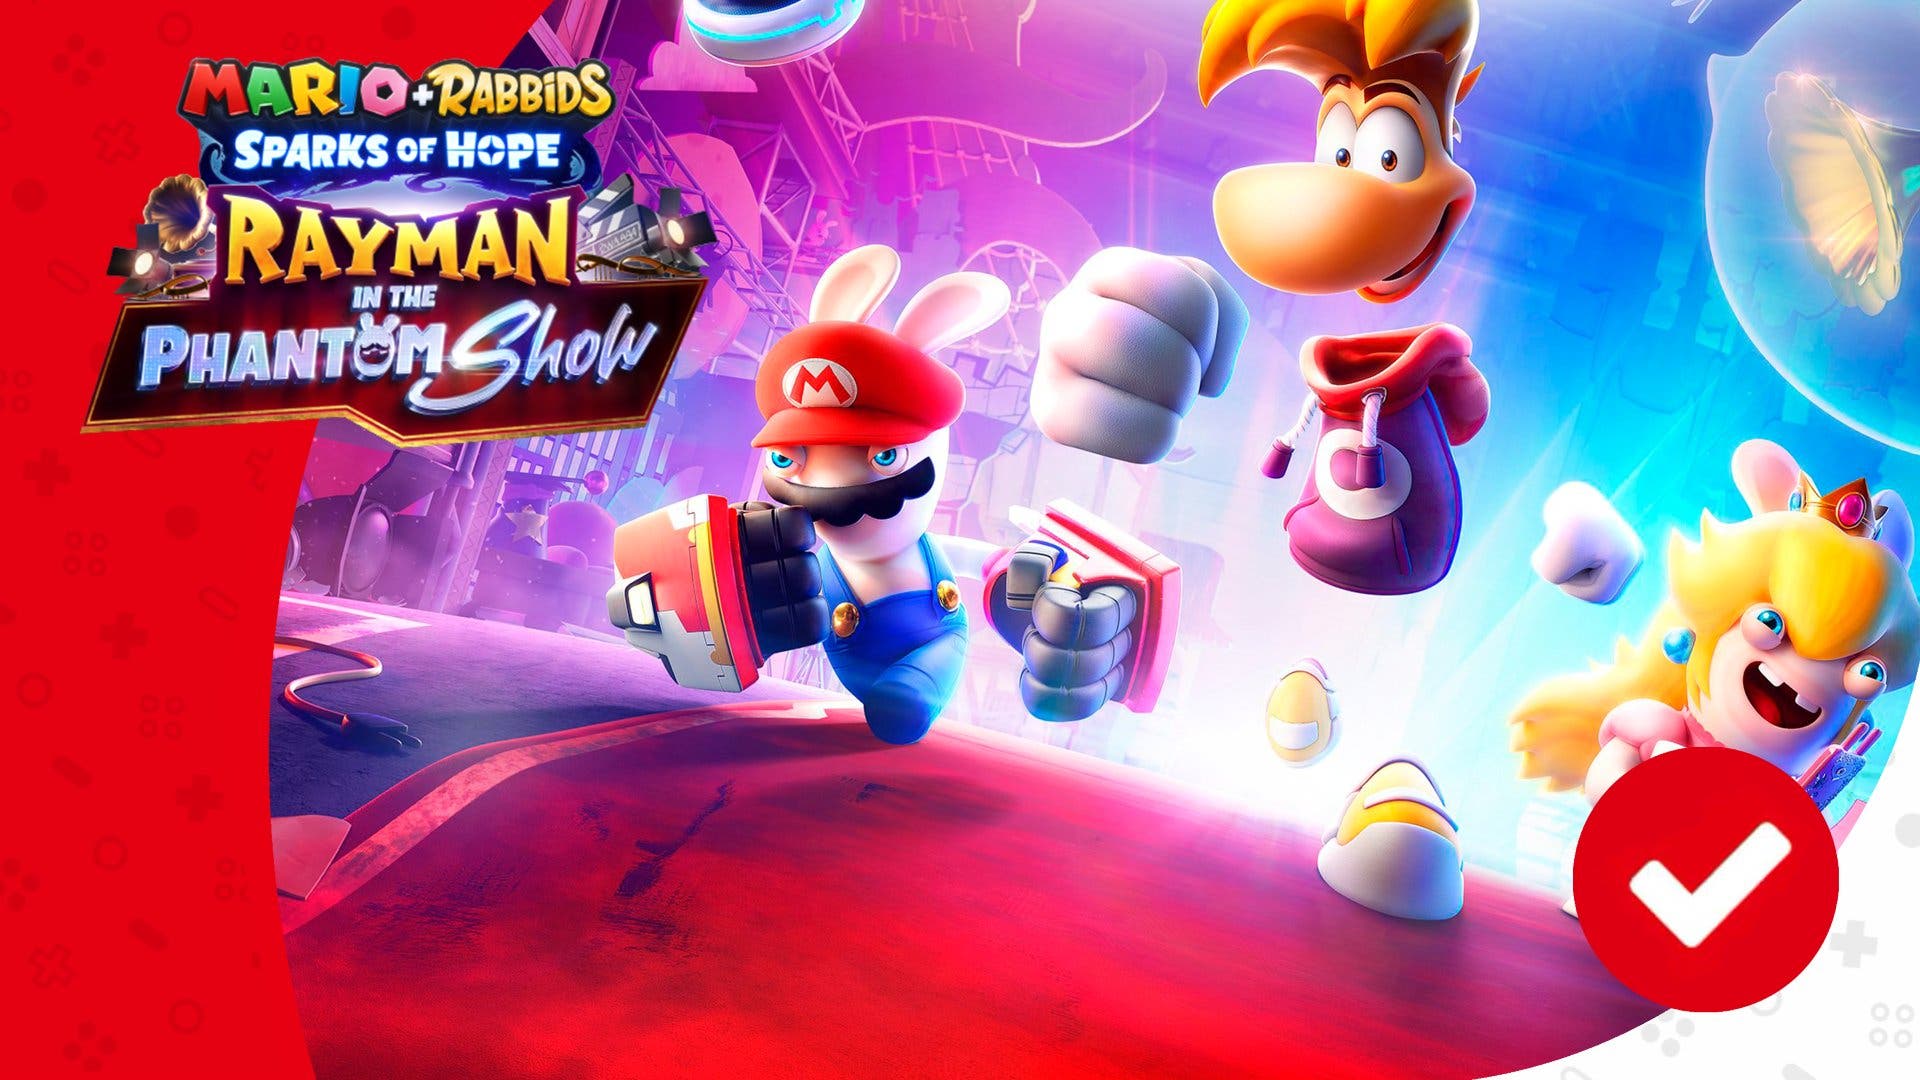 Mario + Rabbids® Sparks of Hope DLC 3: Rayman in the Phantom Show